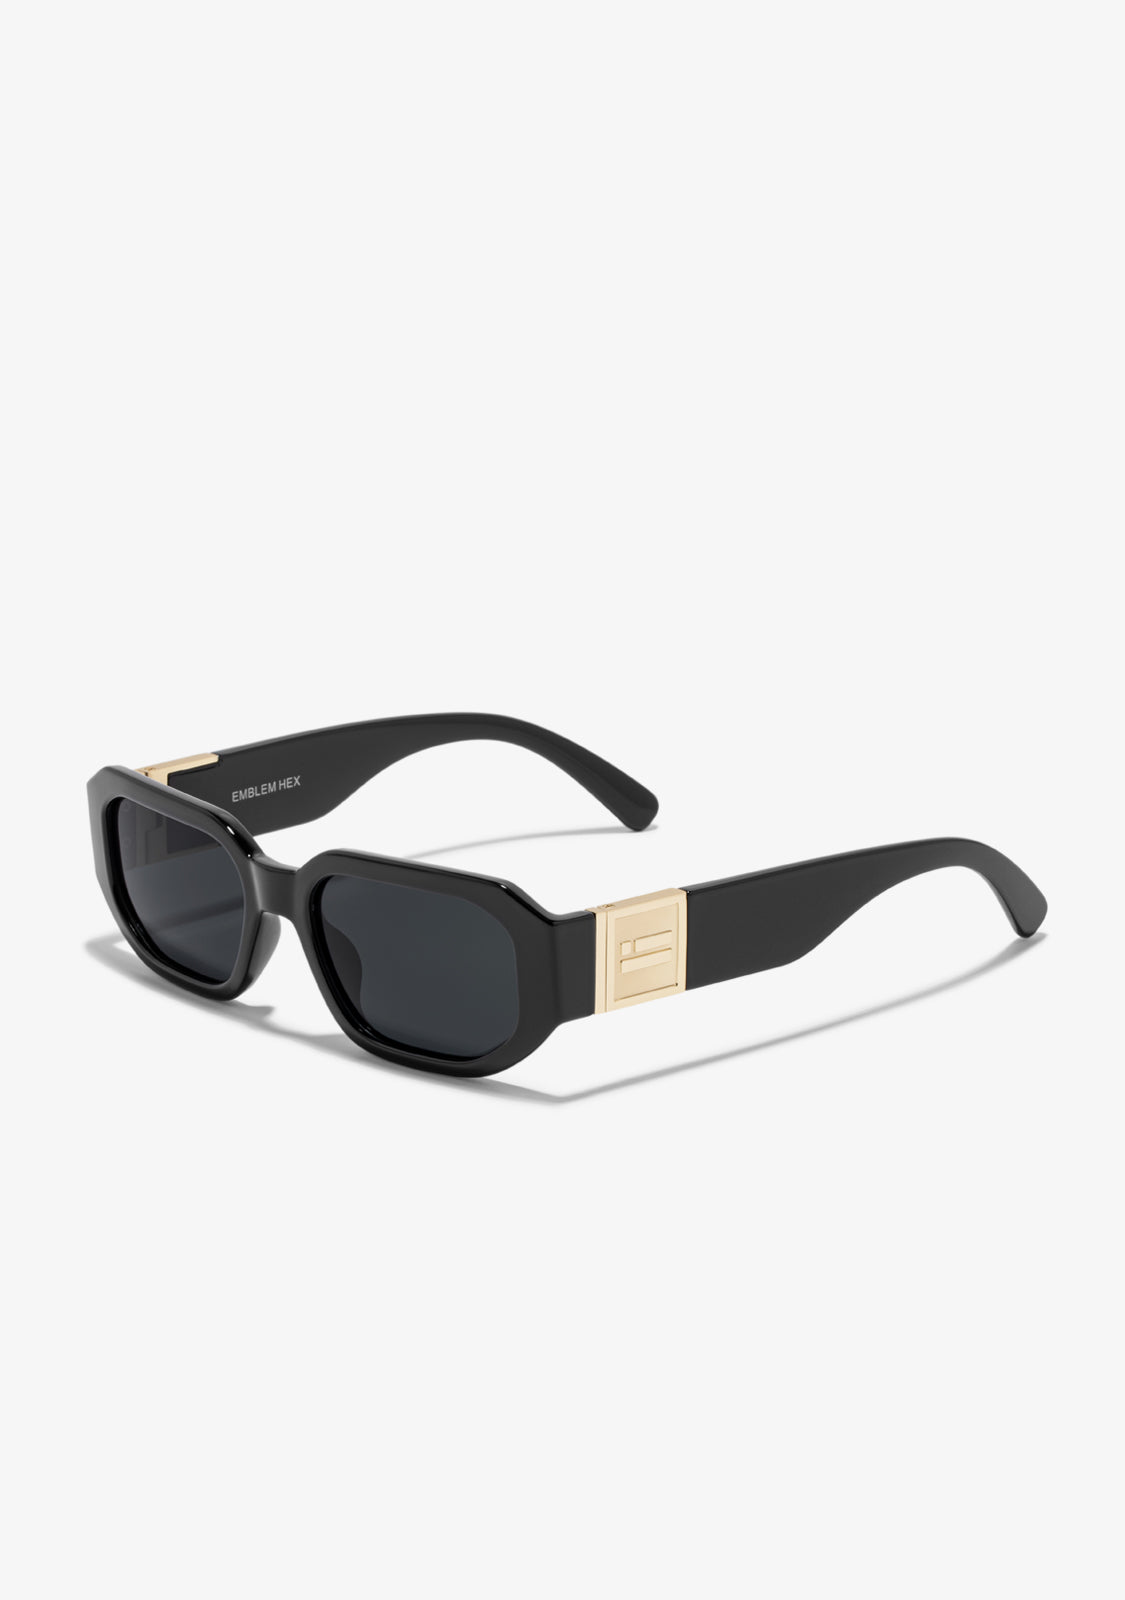 Luxury Mens Designer D Franklin Sunglasses Upgraded Z0350W